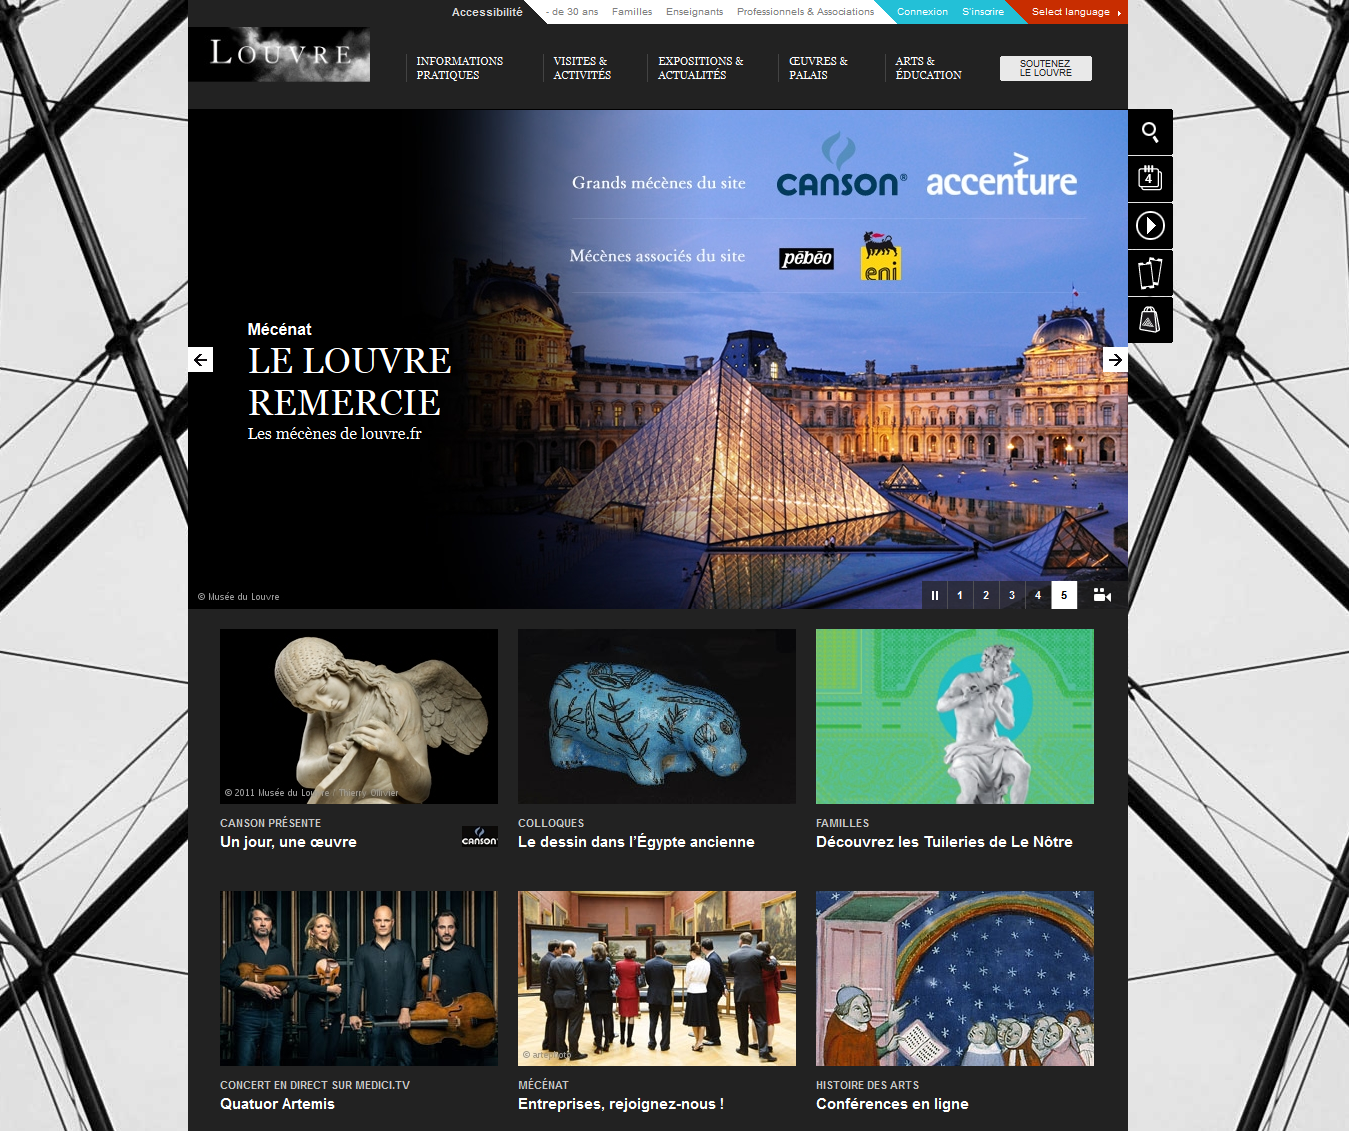 The Louvre Website